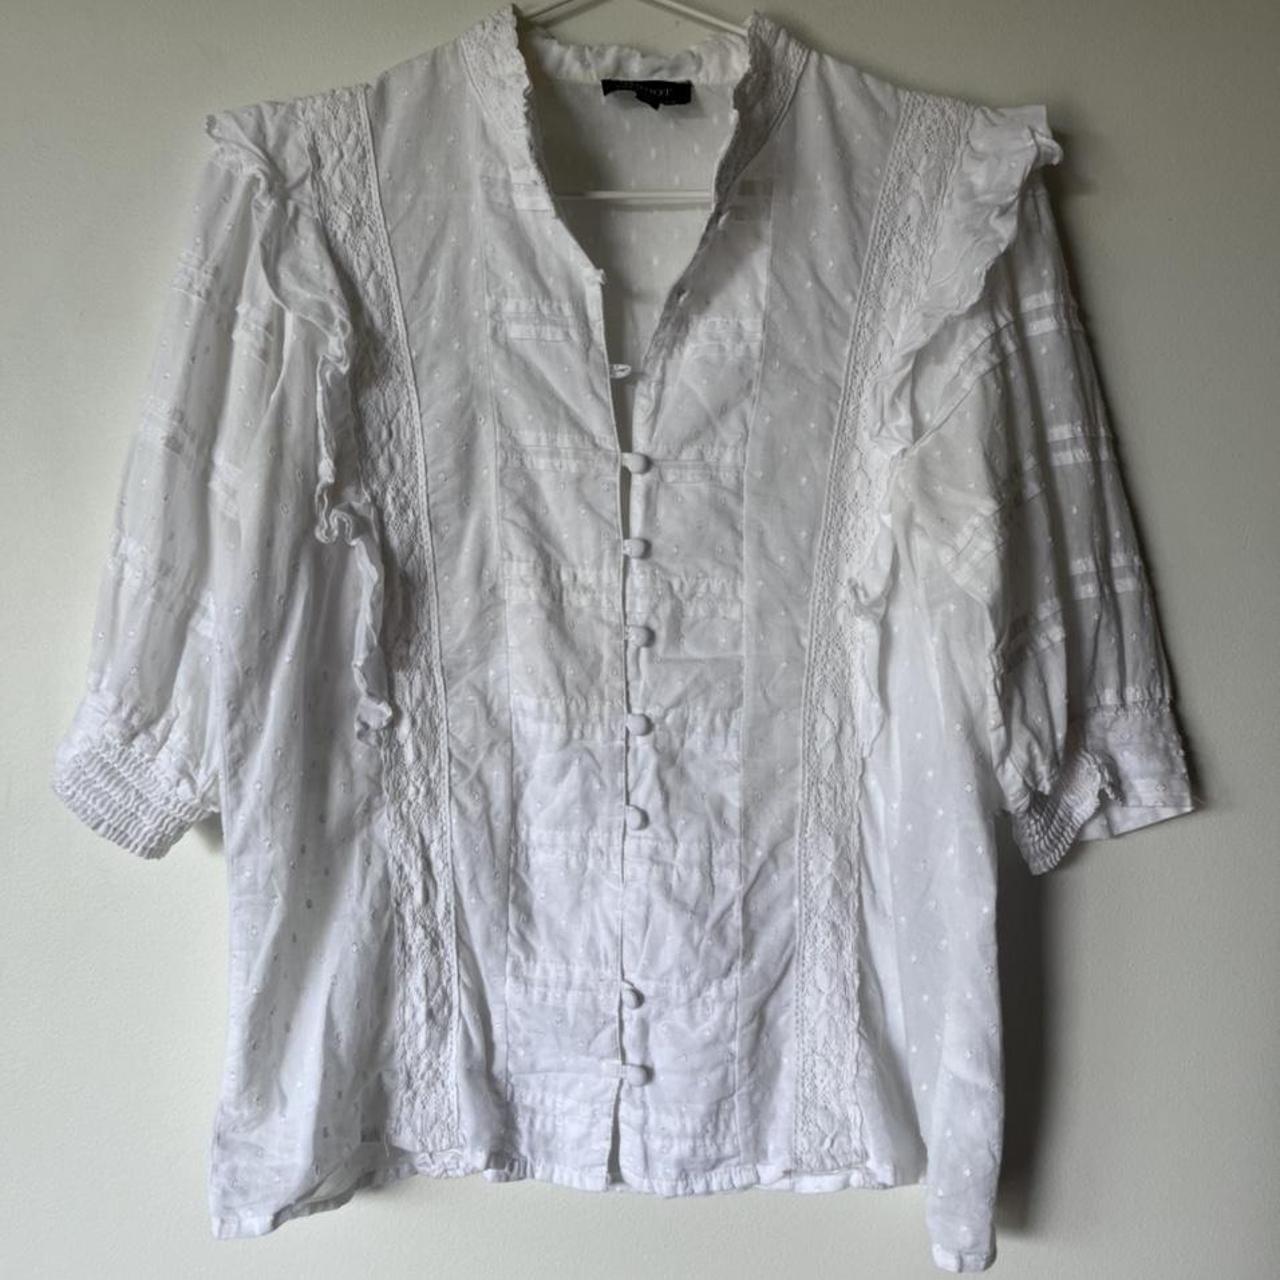 Sweet white lace blouse Size 10 - Depop